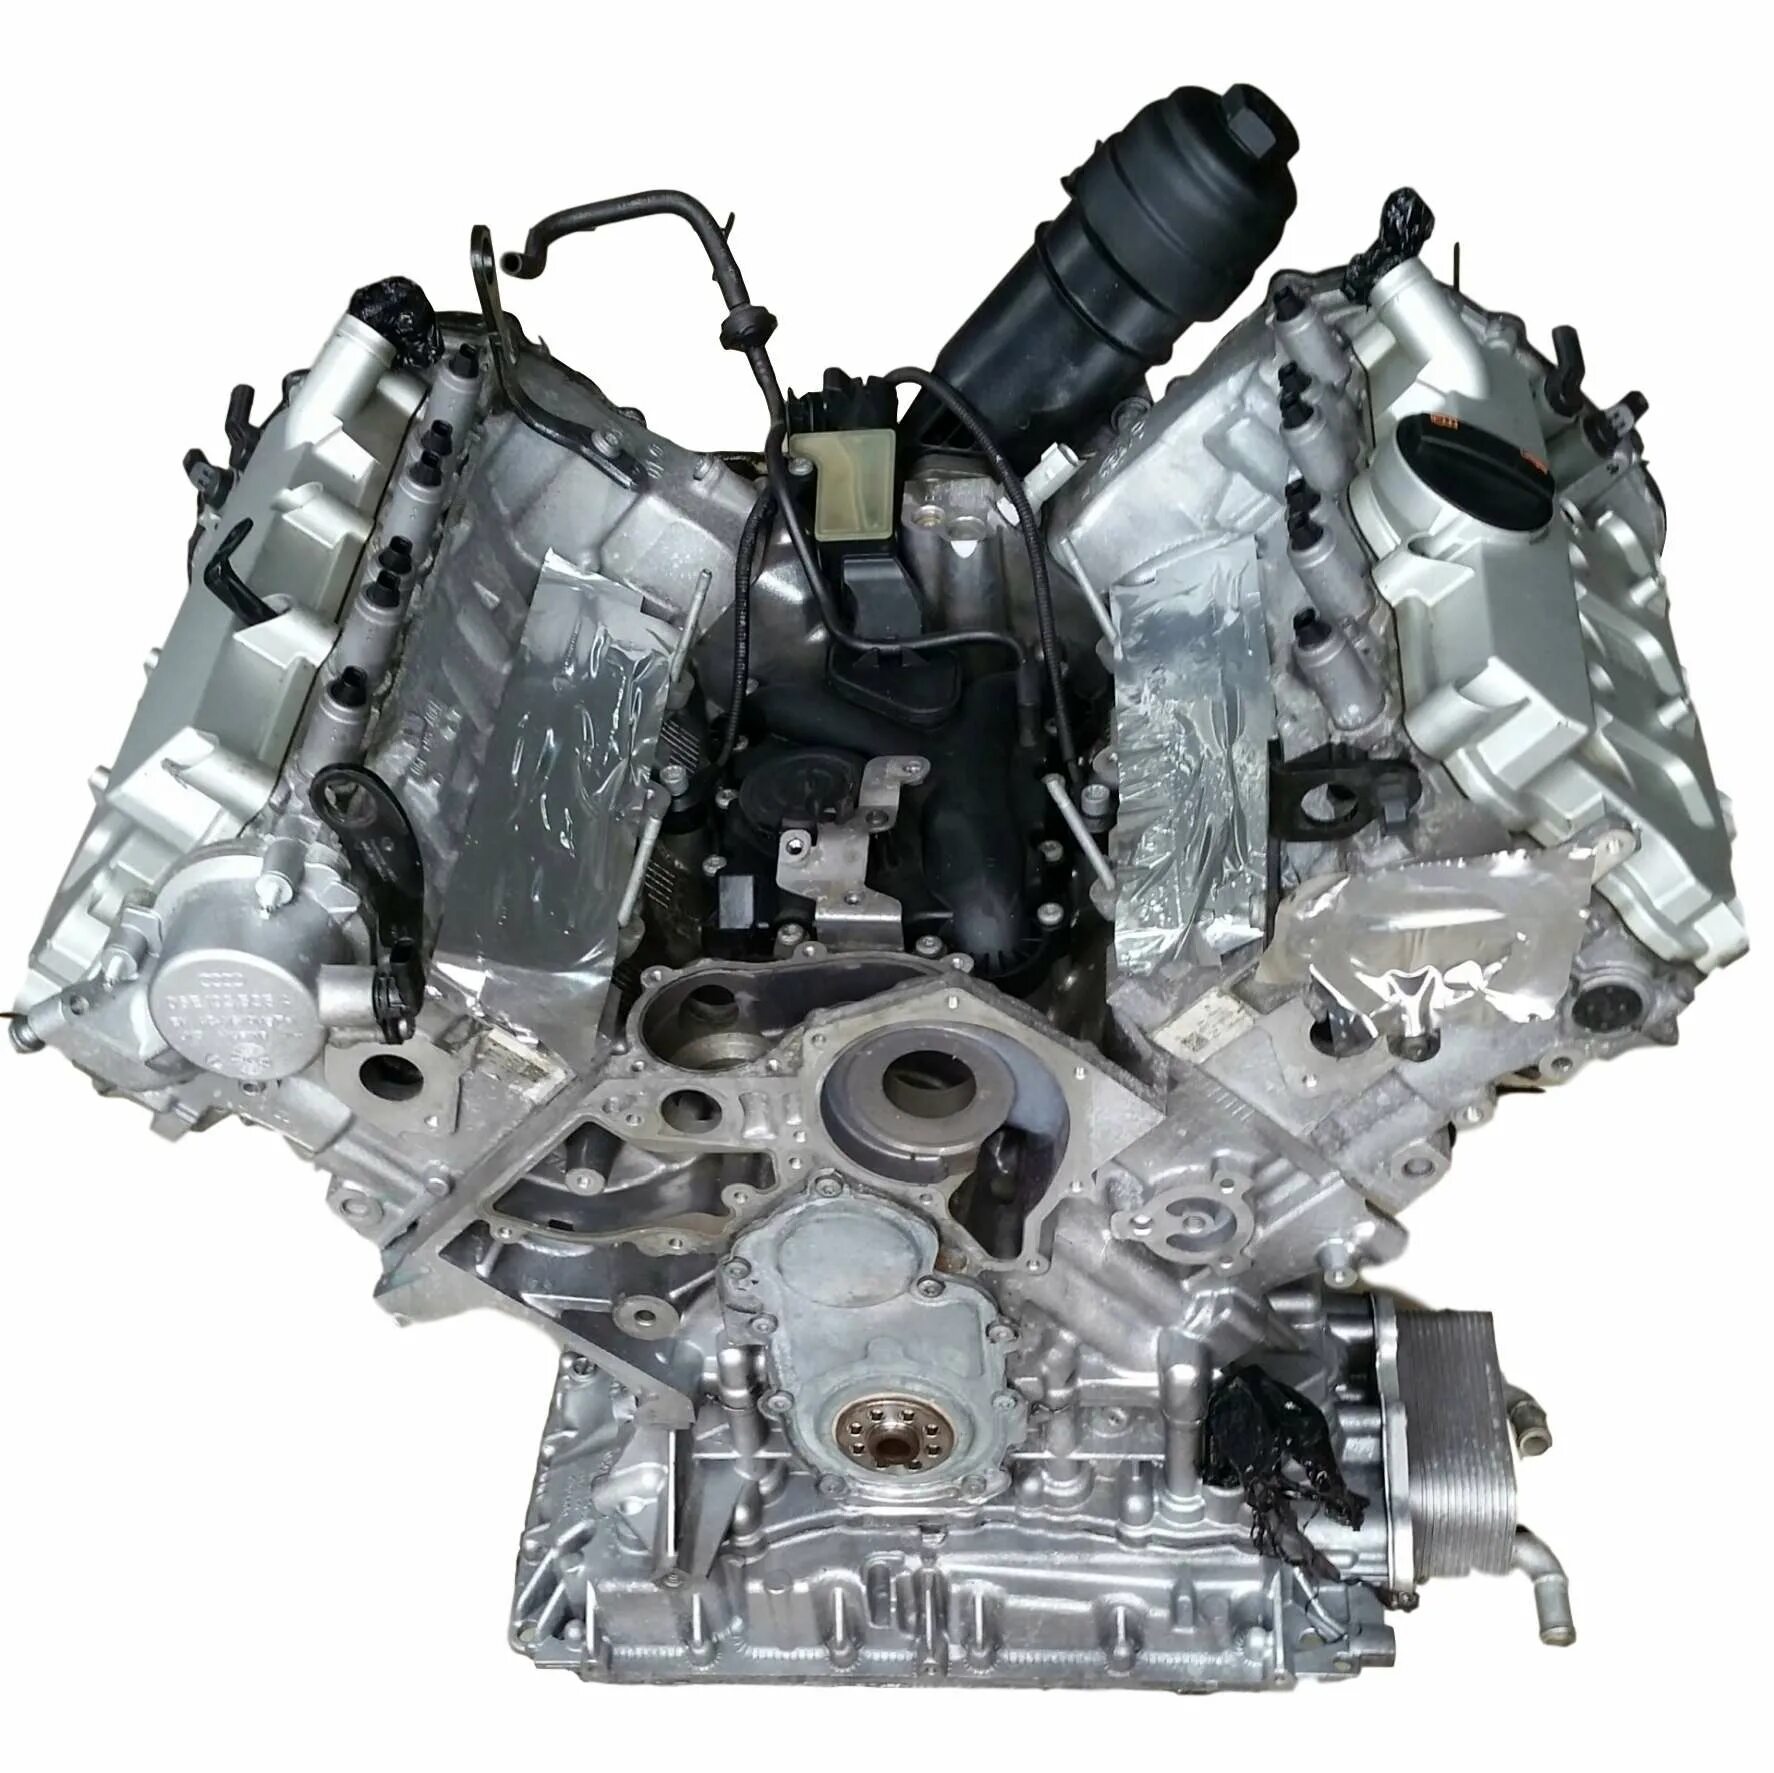 Двигатель CHV 2.8 FSI Audi a6. CHV двигатель Ауди. CHVA 2.8 FSI. Двигатель Ауди 2.8 BDX. Купить двигатель в кредит